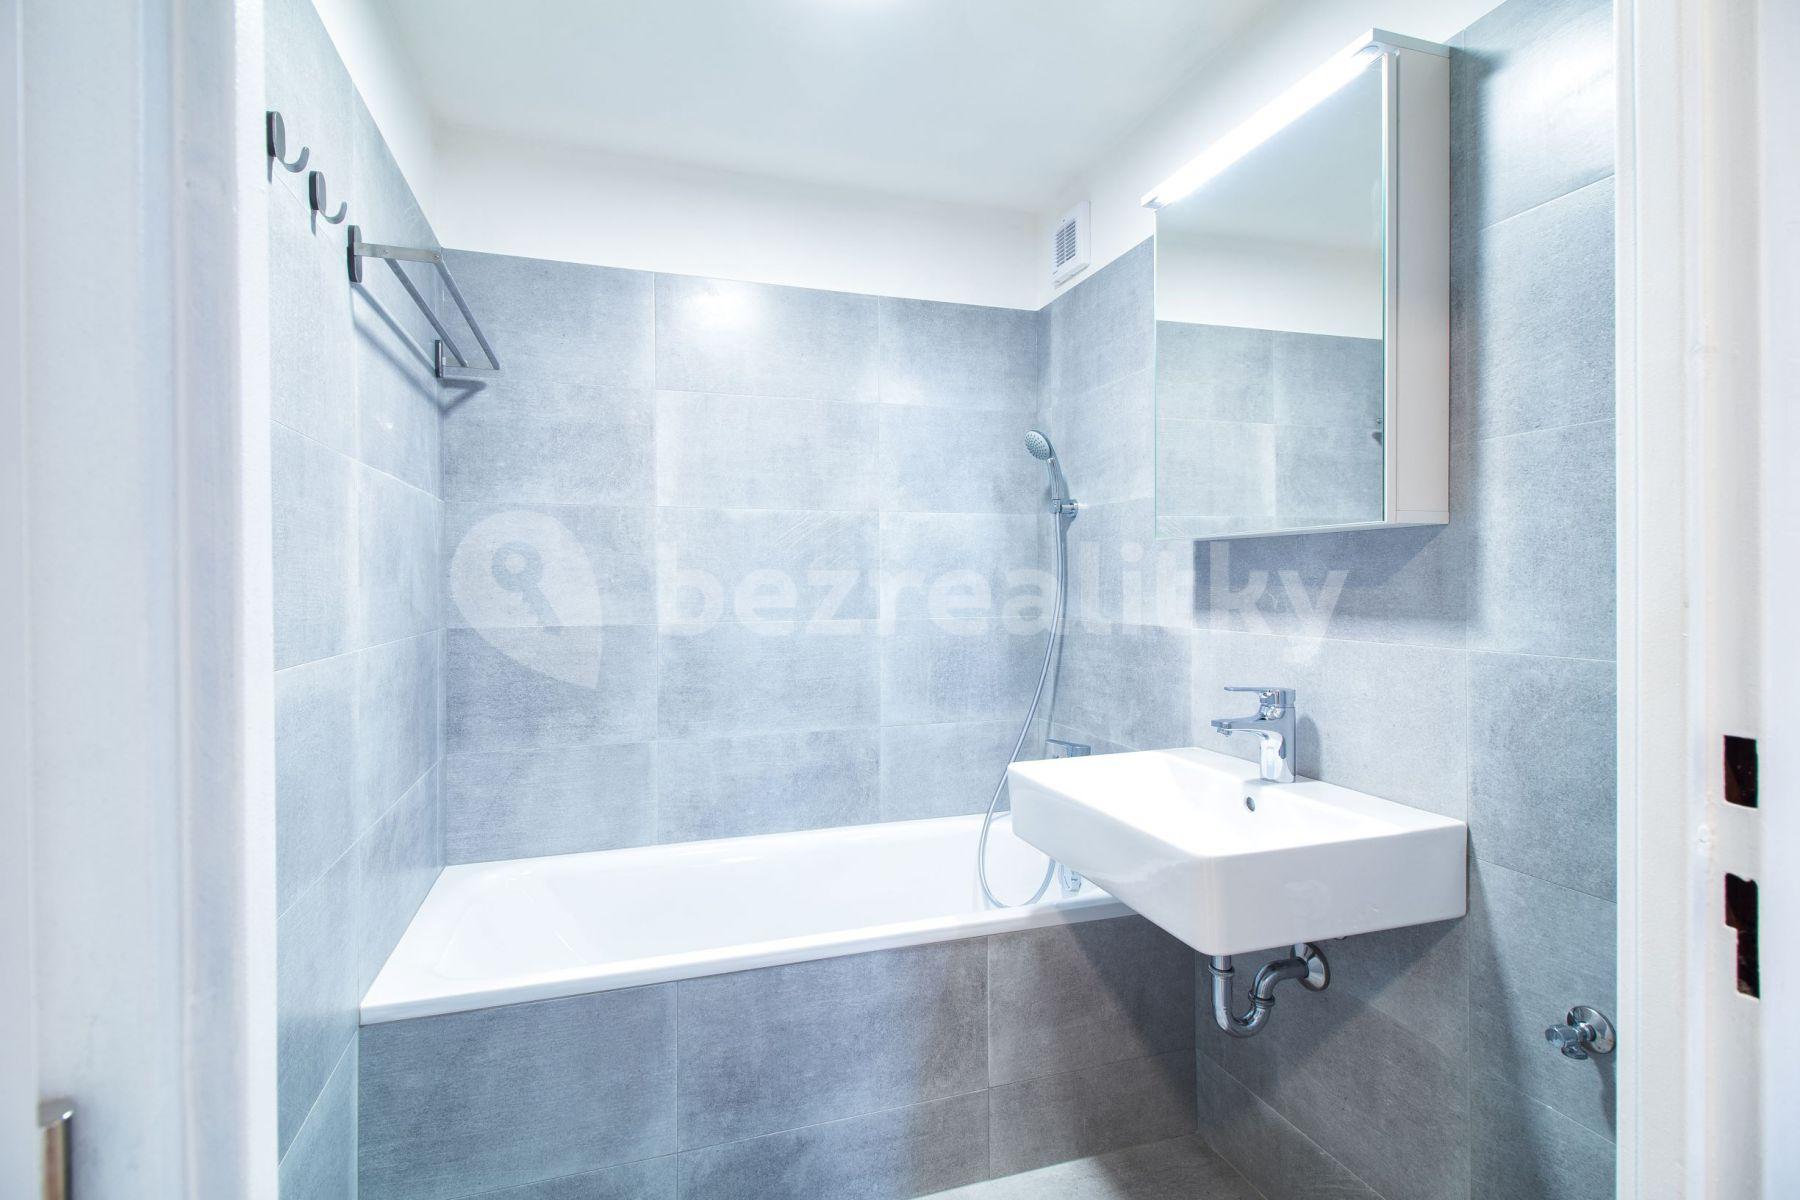 3 bedroom flat to rent, 98 m², Hodkovická, Liberec, Liberecký Region